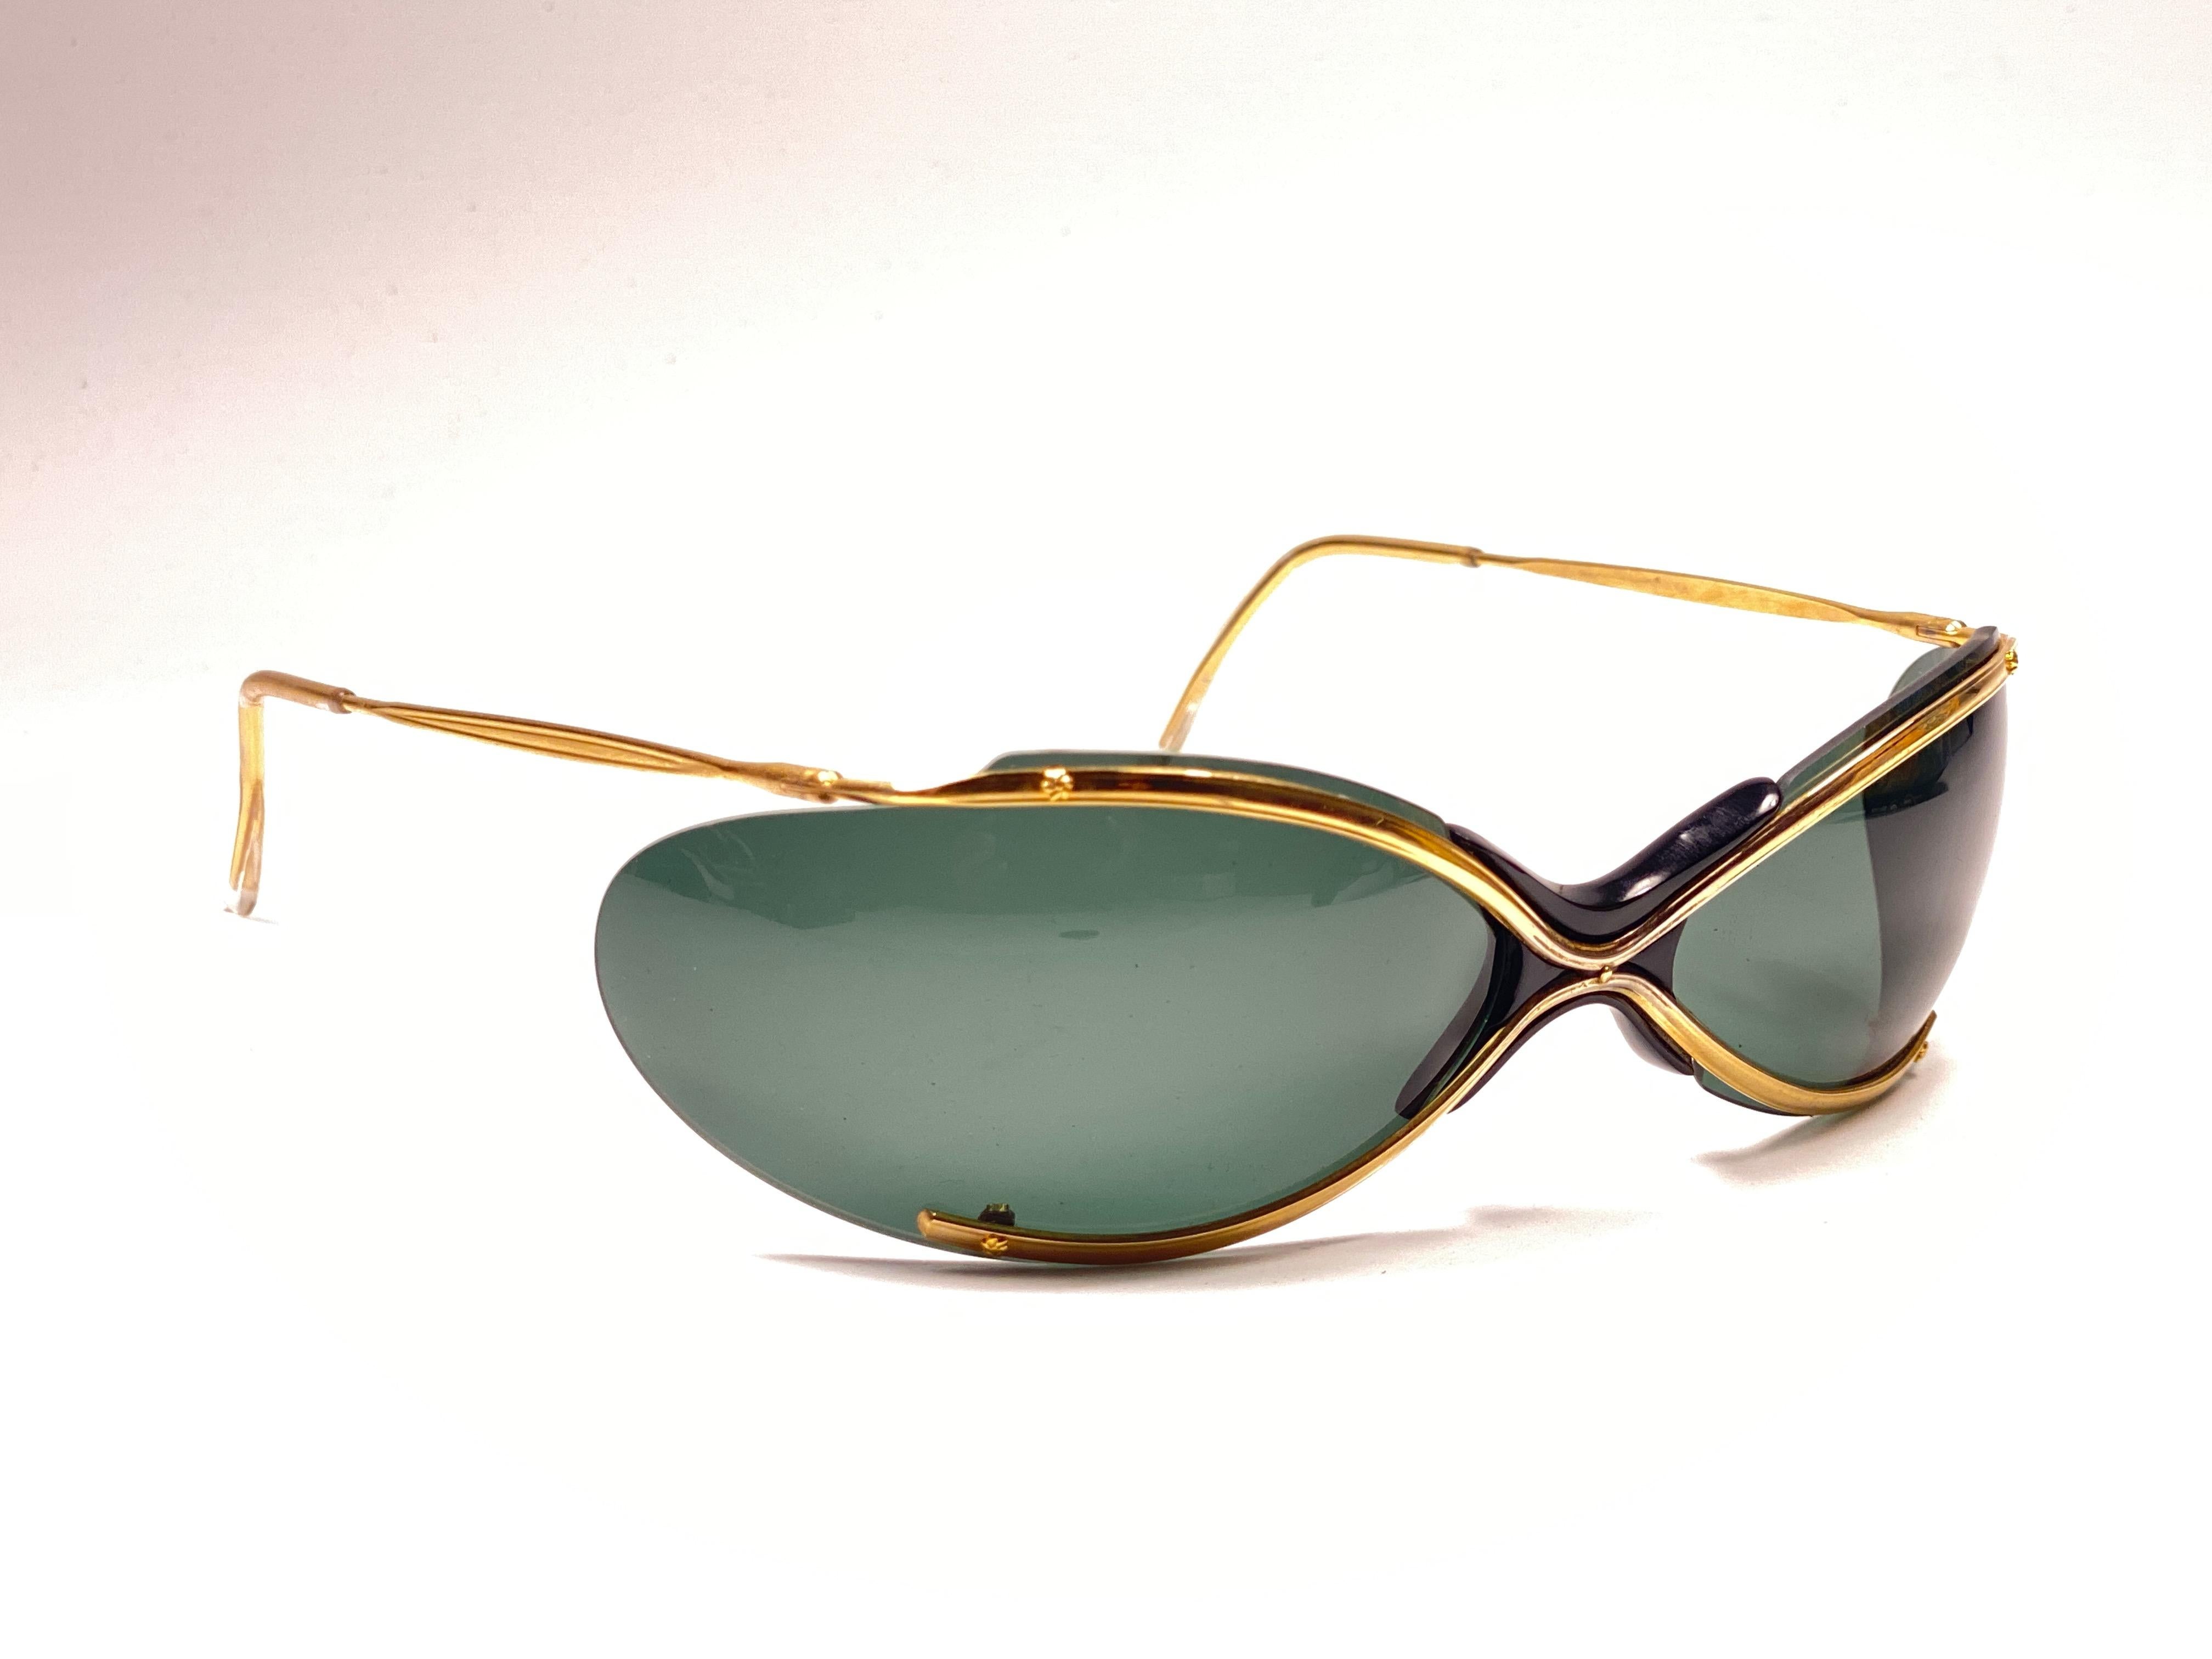 renauld sunglasses for sale